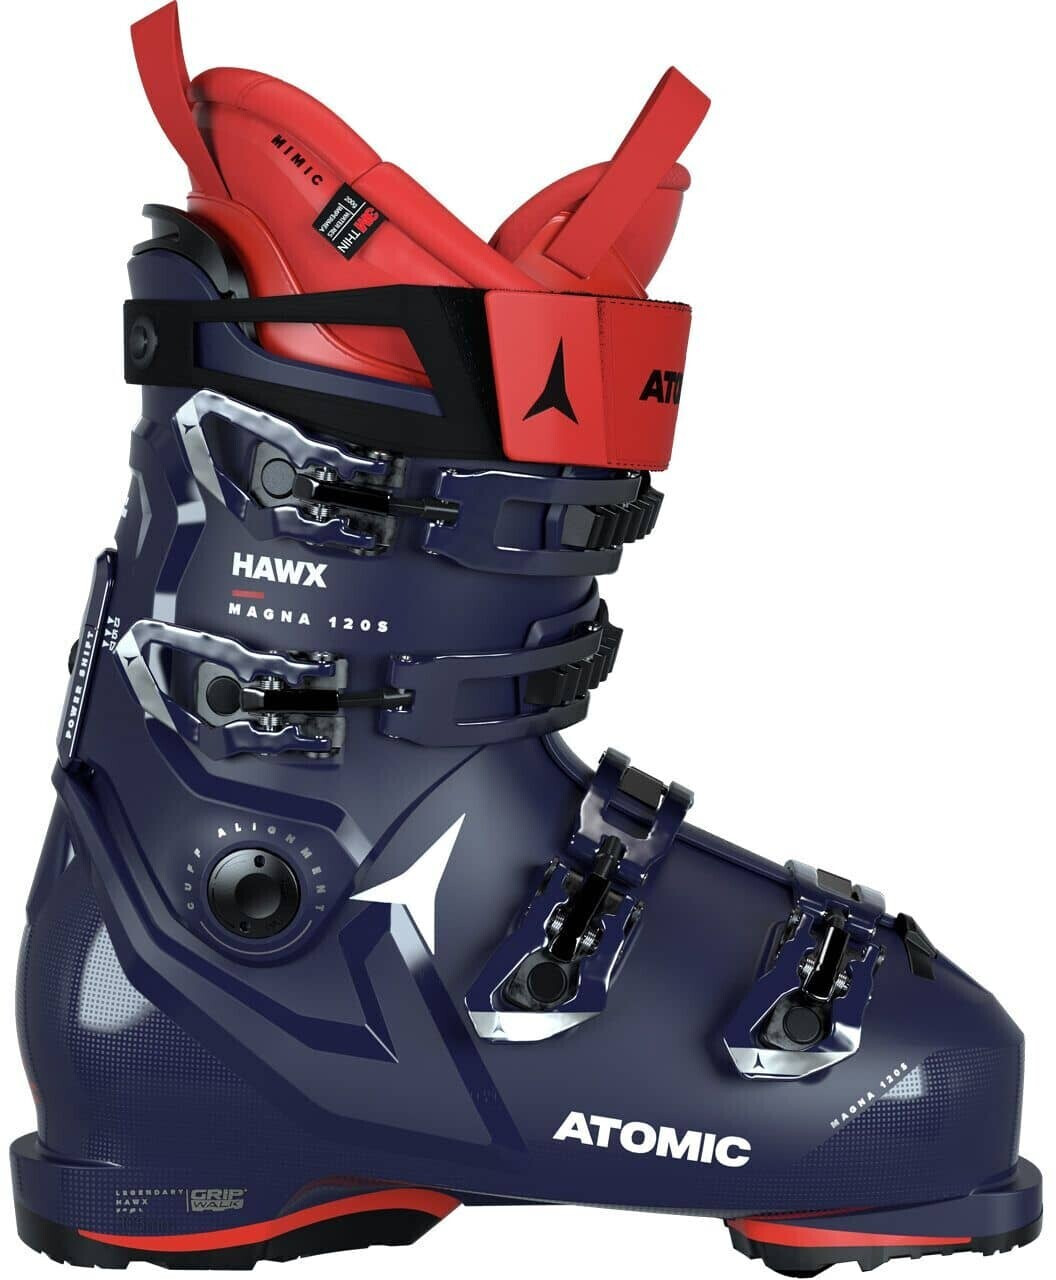 Photos - Ski Boots Atomic Hawx Magna 120 S Gw  ryal blue/red (AE5026940)